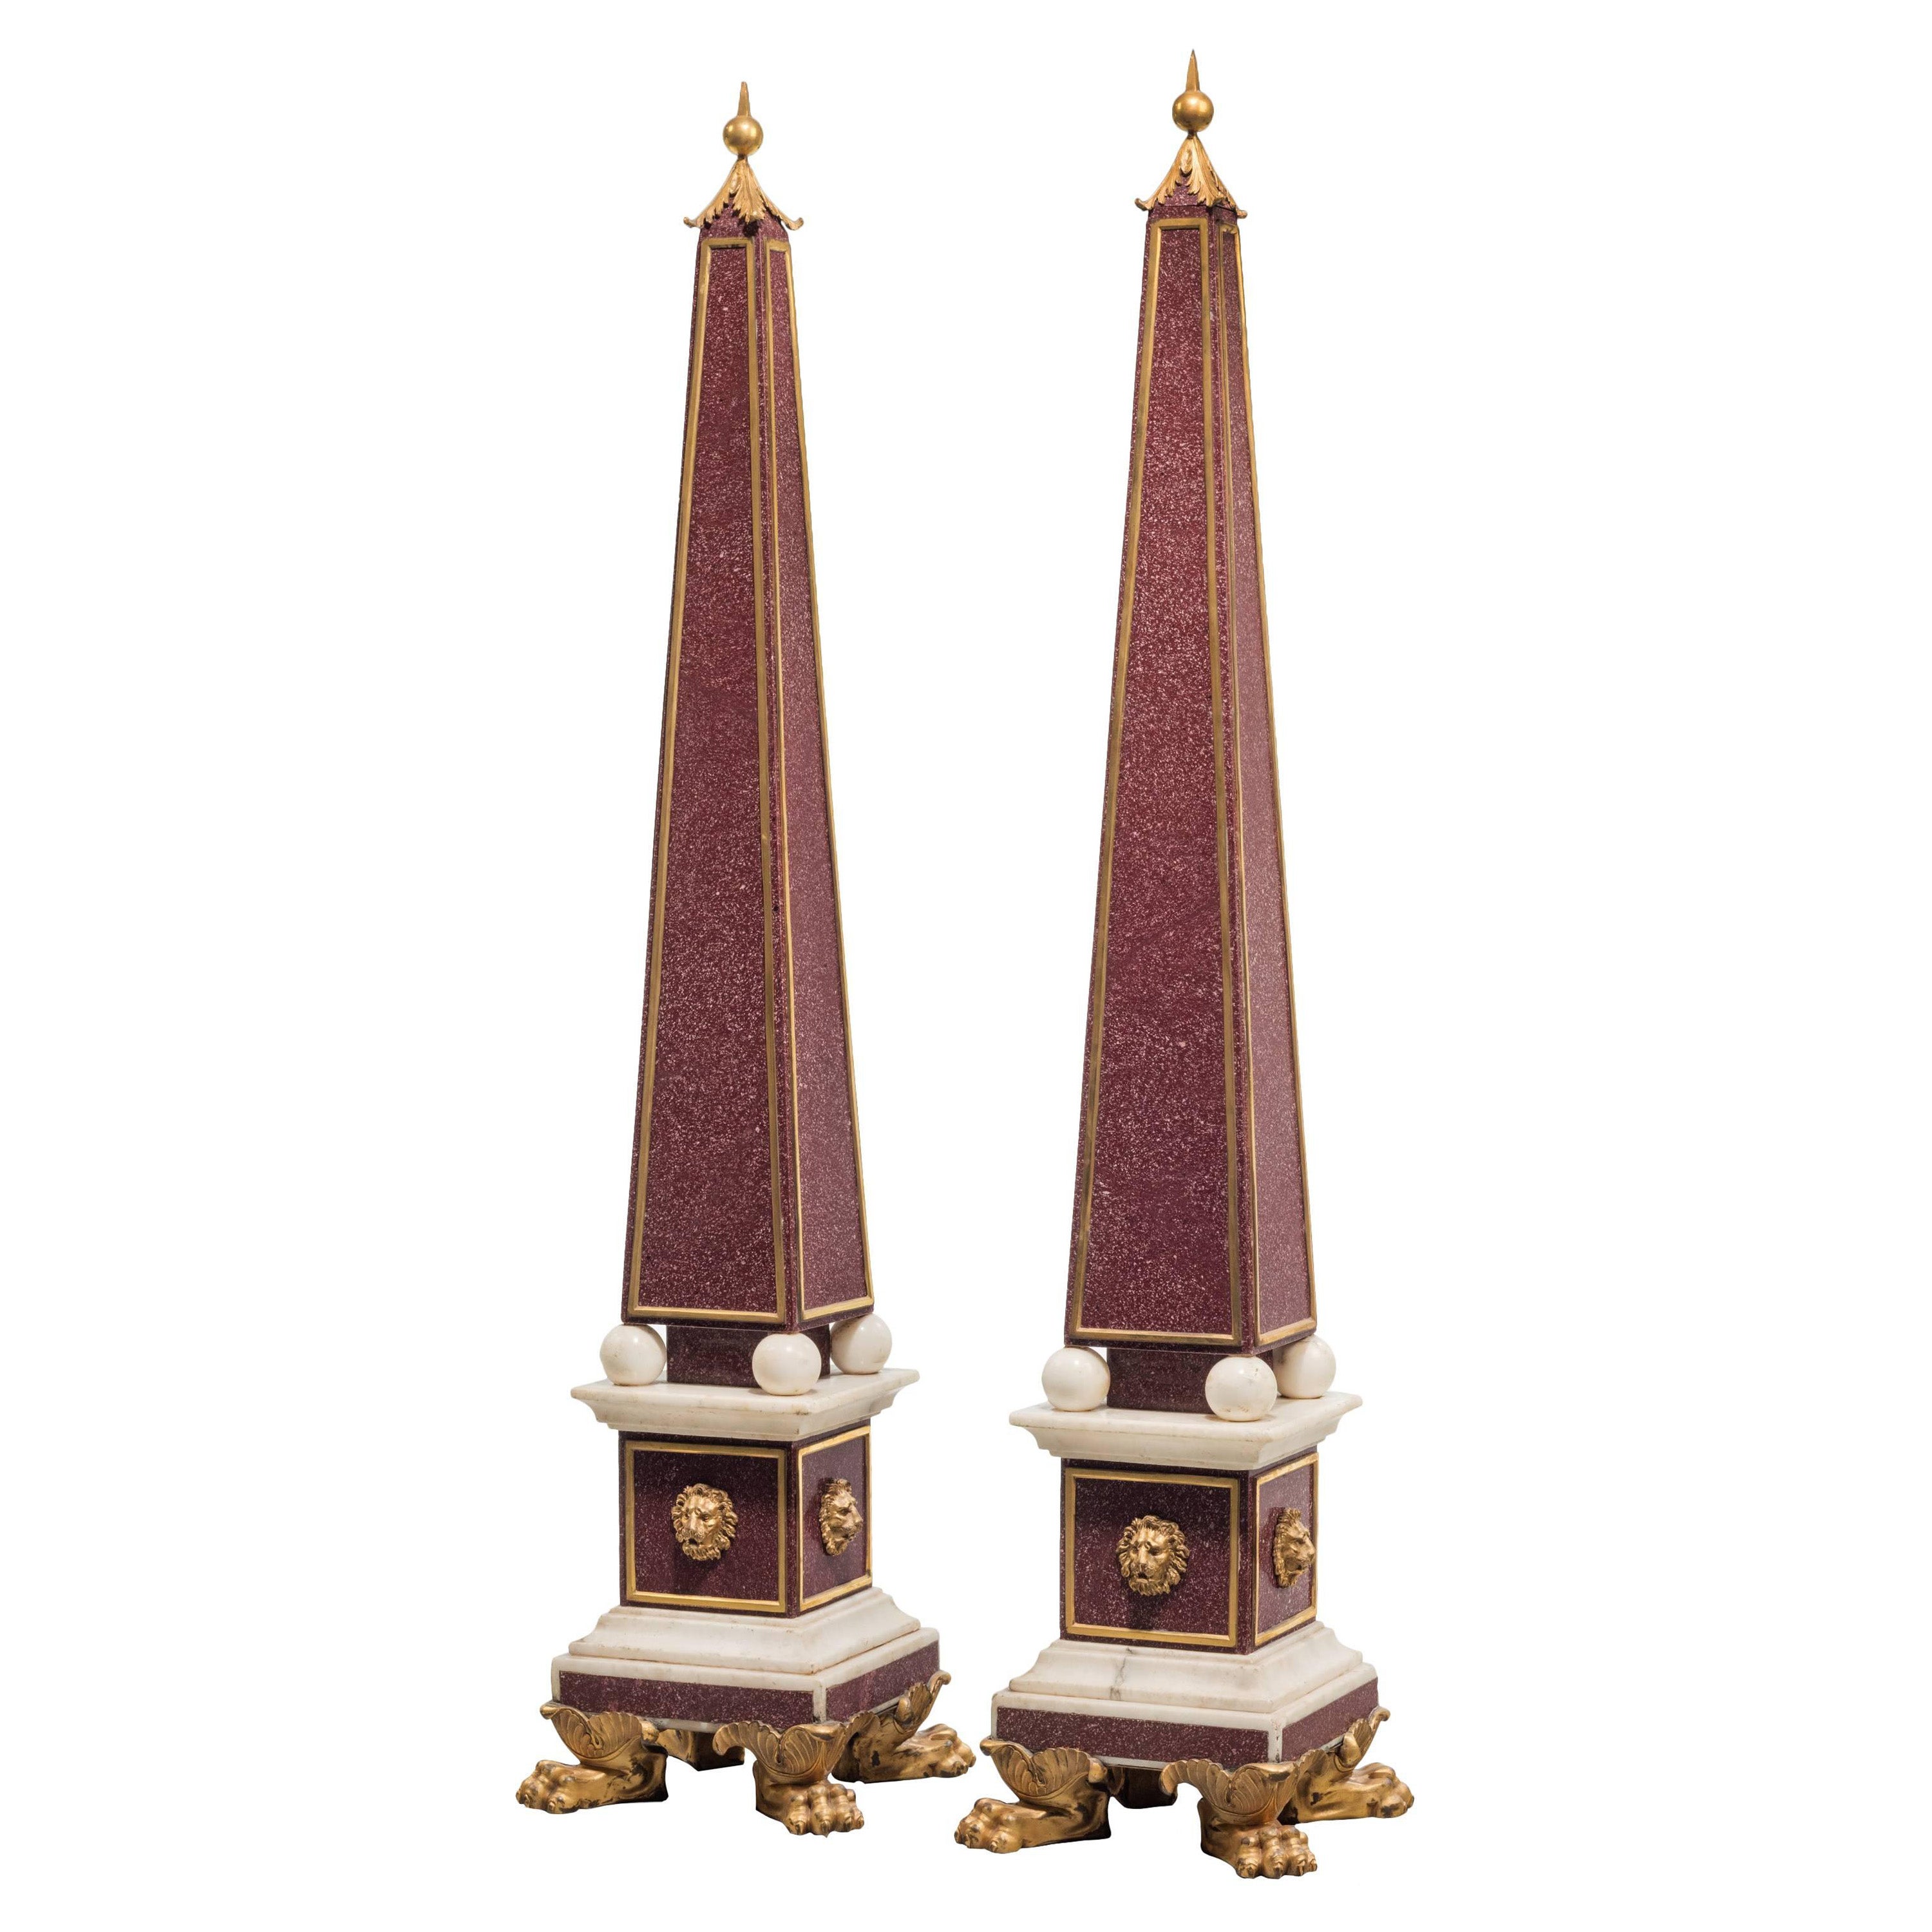 Impressive Pair of Late 19th Century Obelisks